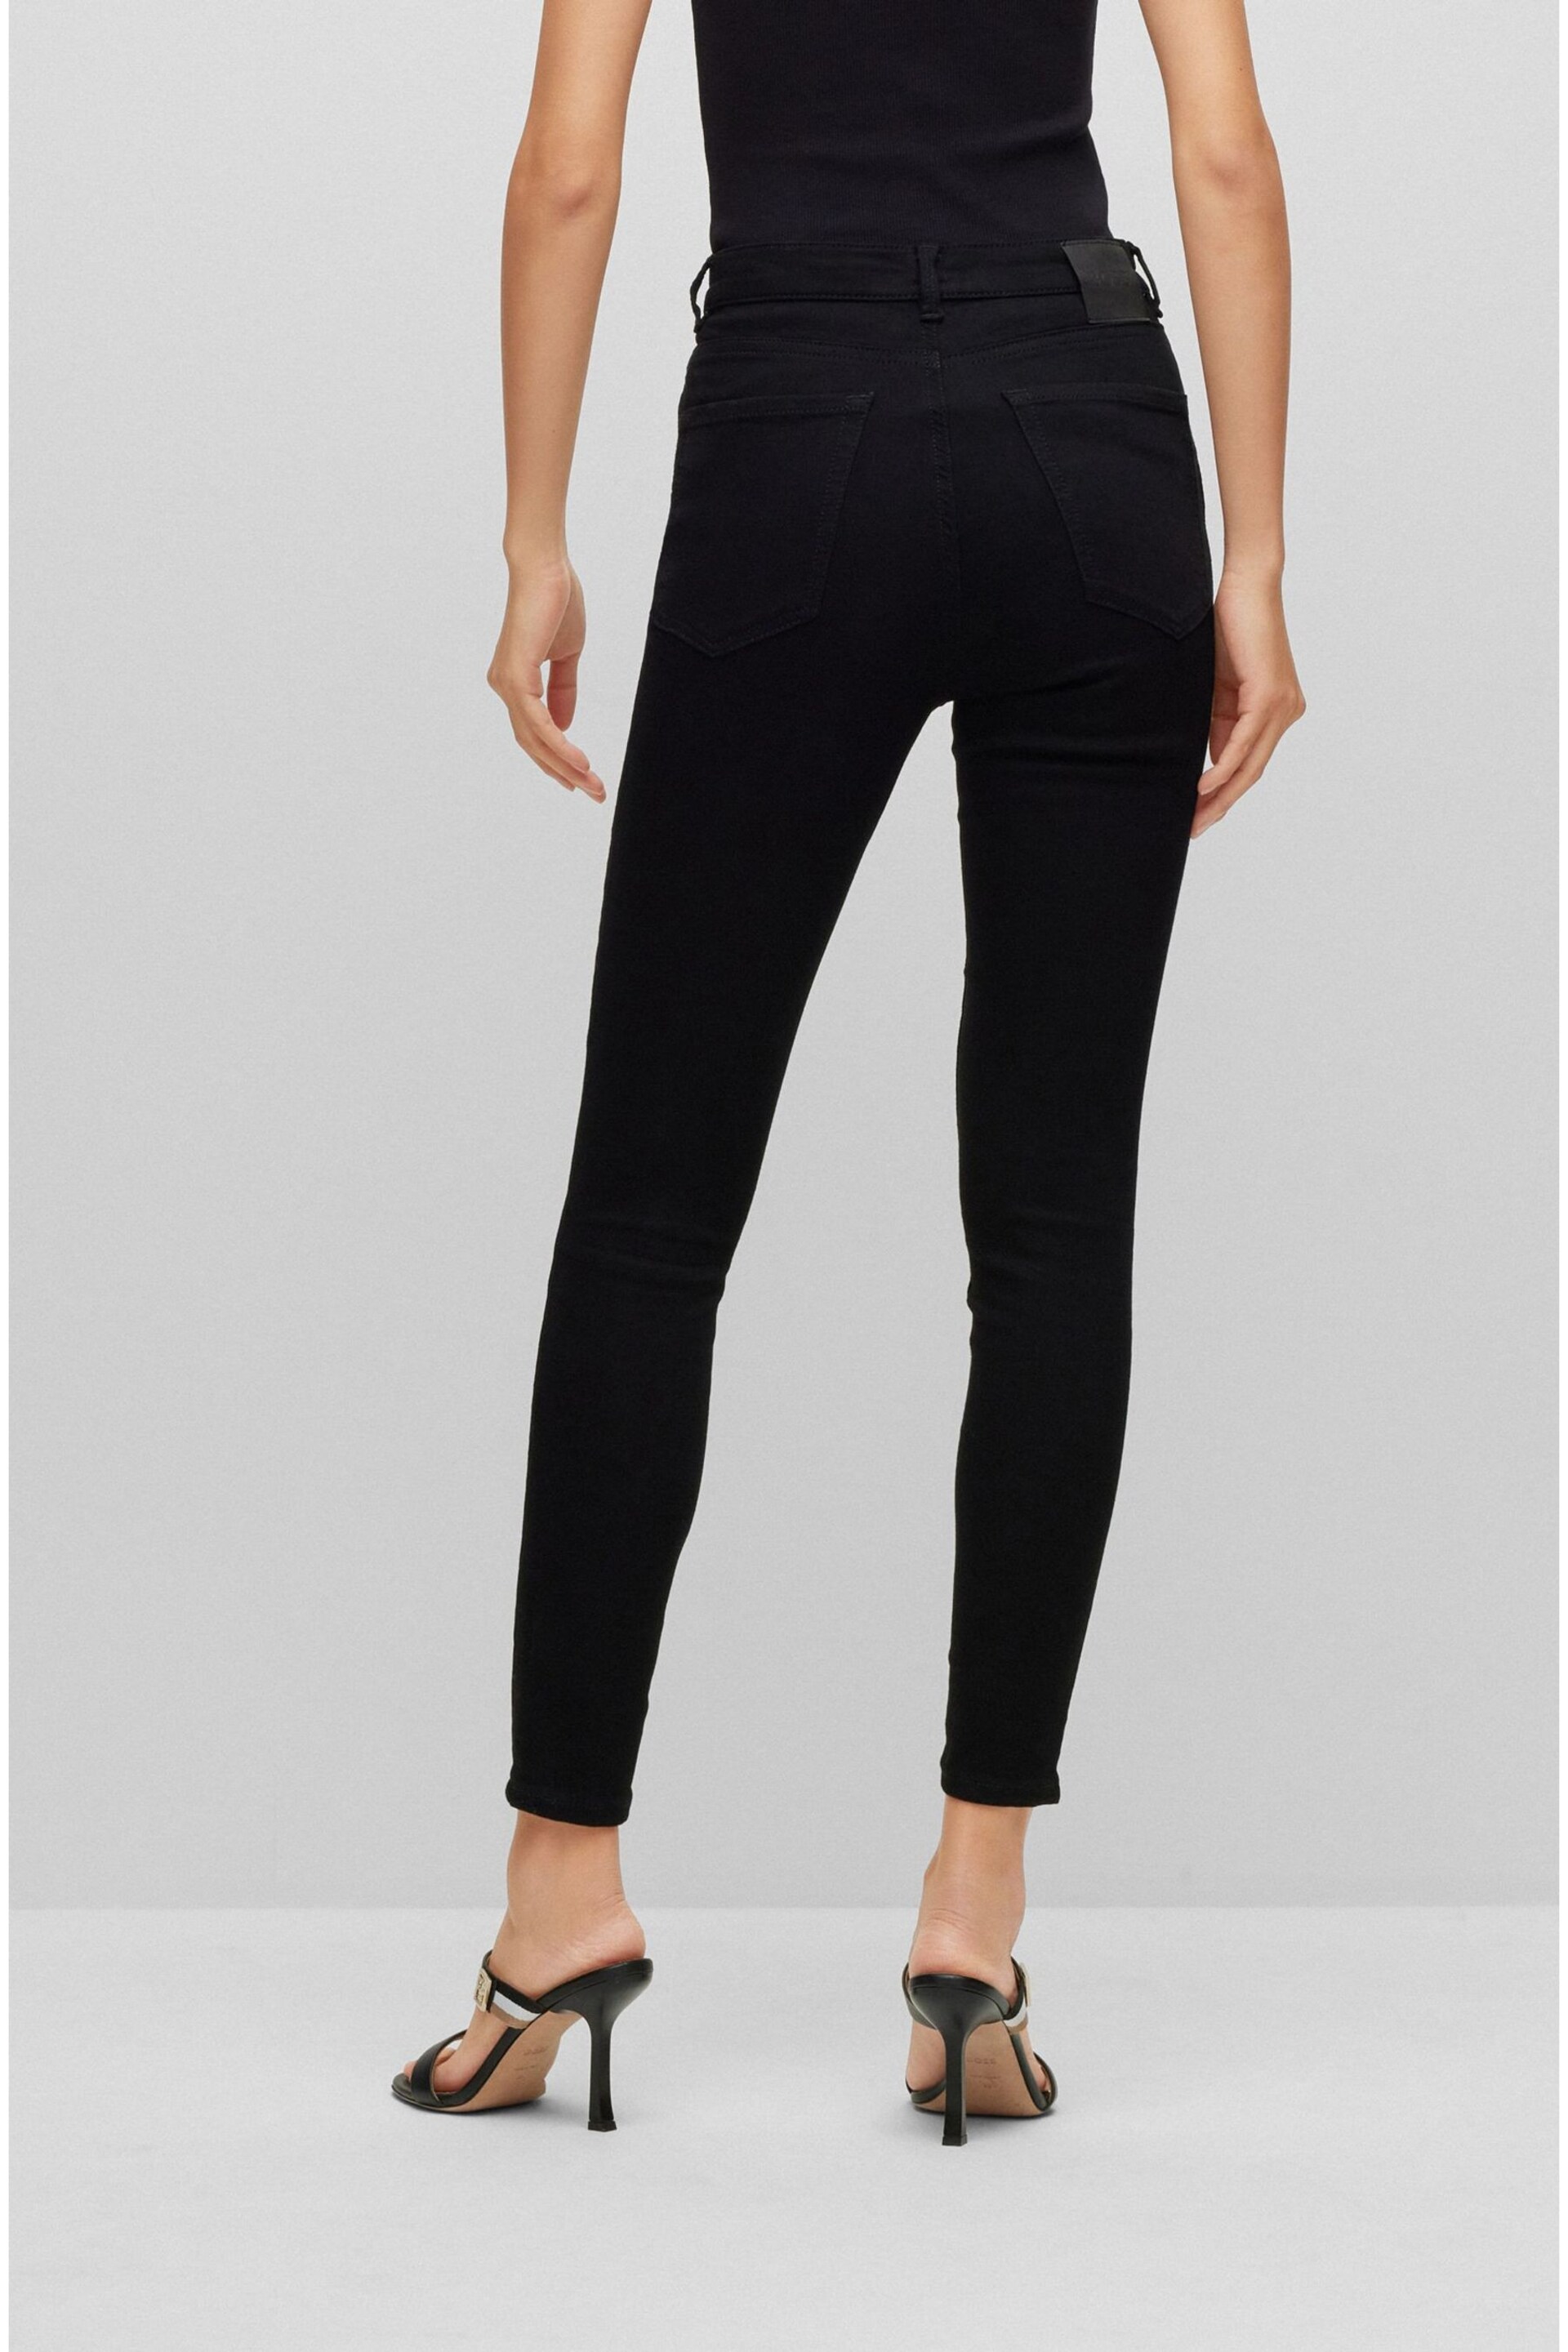 BOSS Black Maye Slim Stretch Jeans - Image 2 of 6